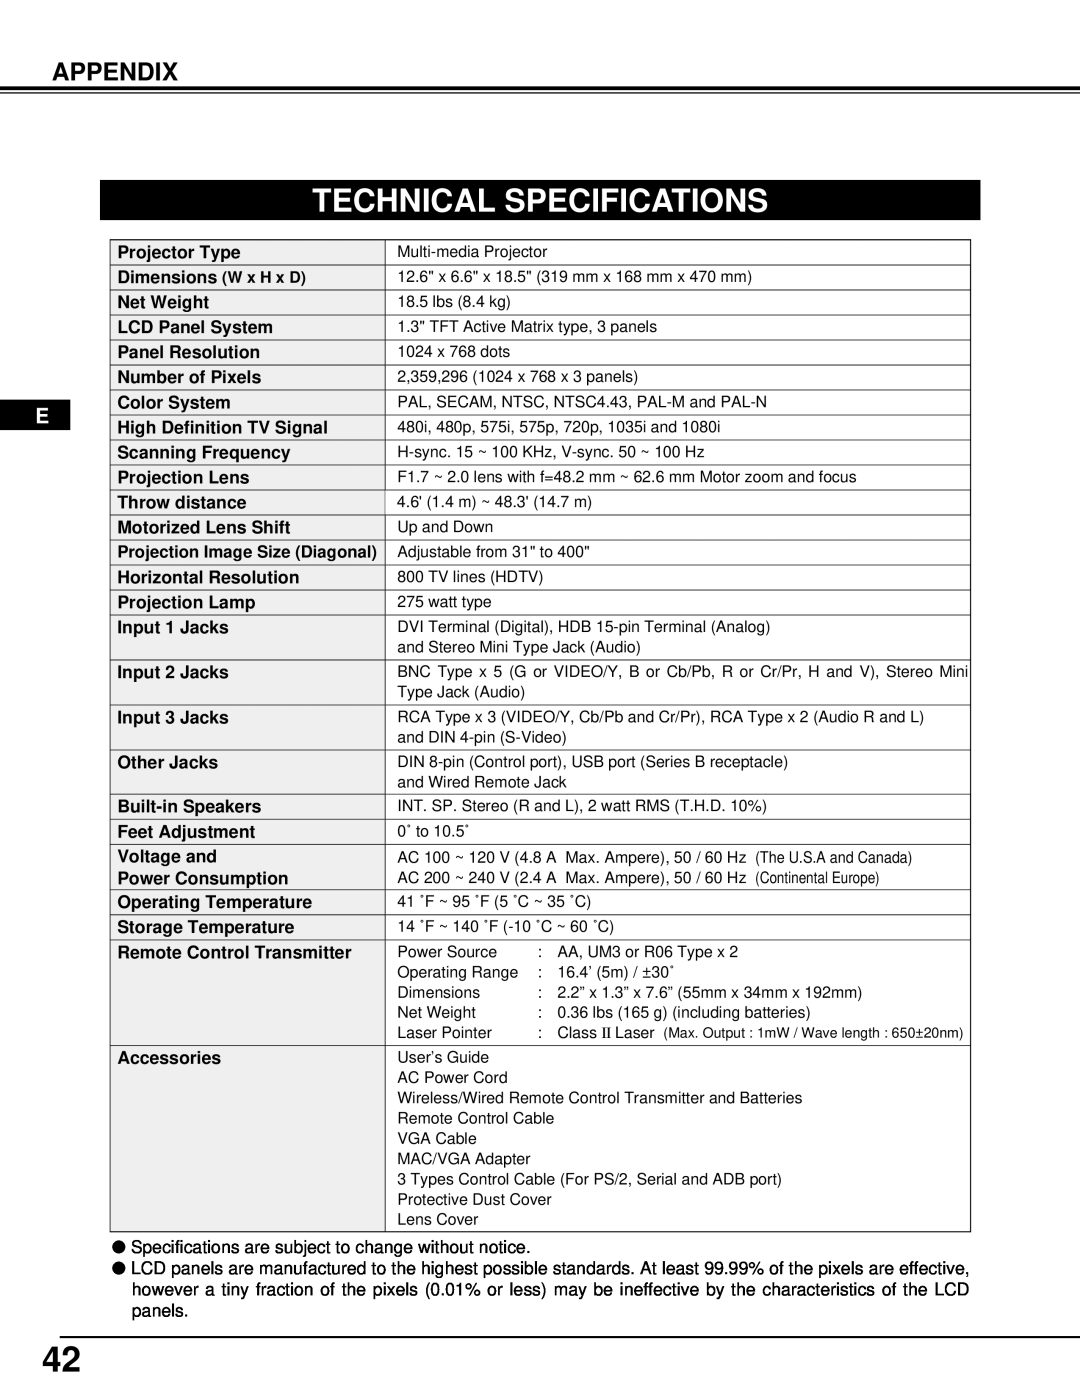 InFocus DP9295 manual Technical Specifications, Appendix 